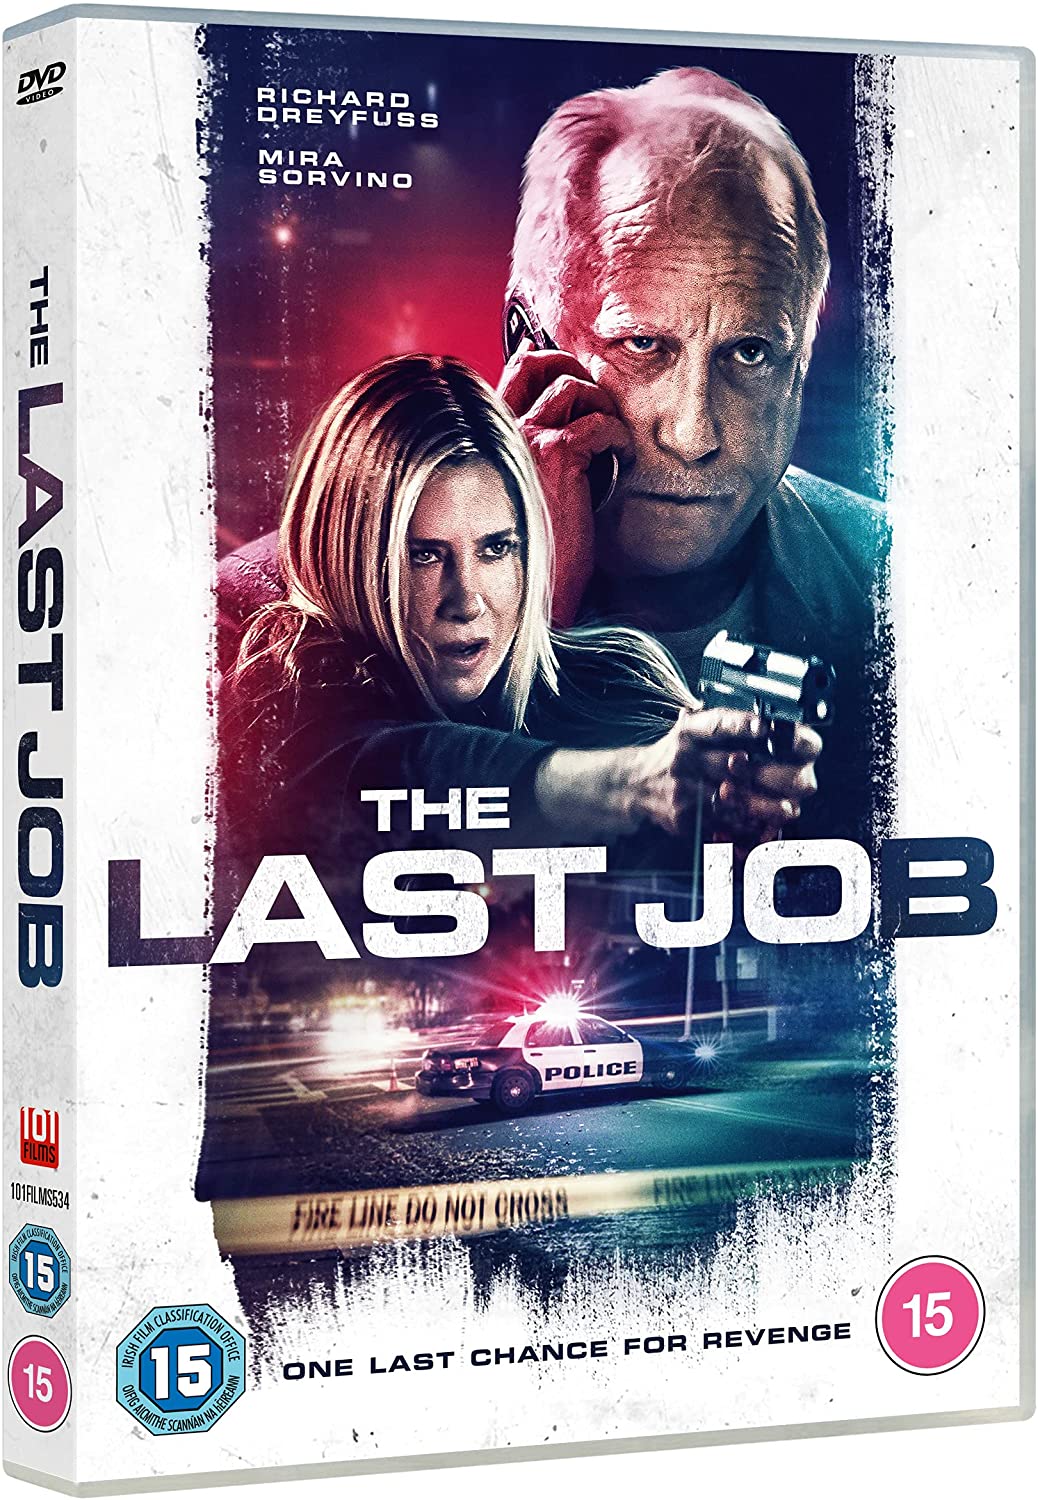 The Last Job [DVD]